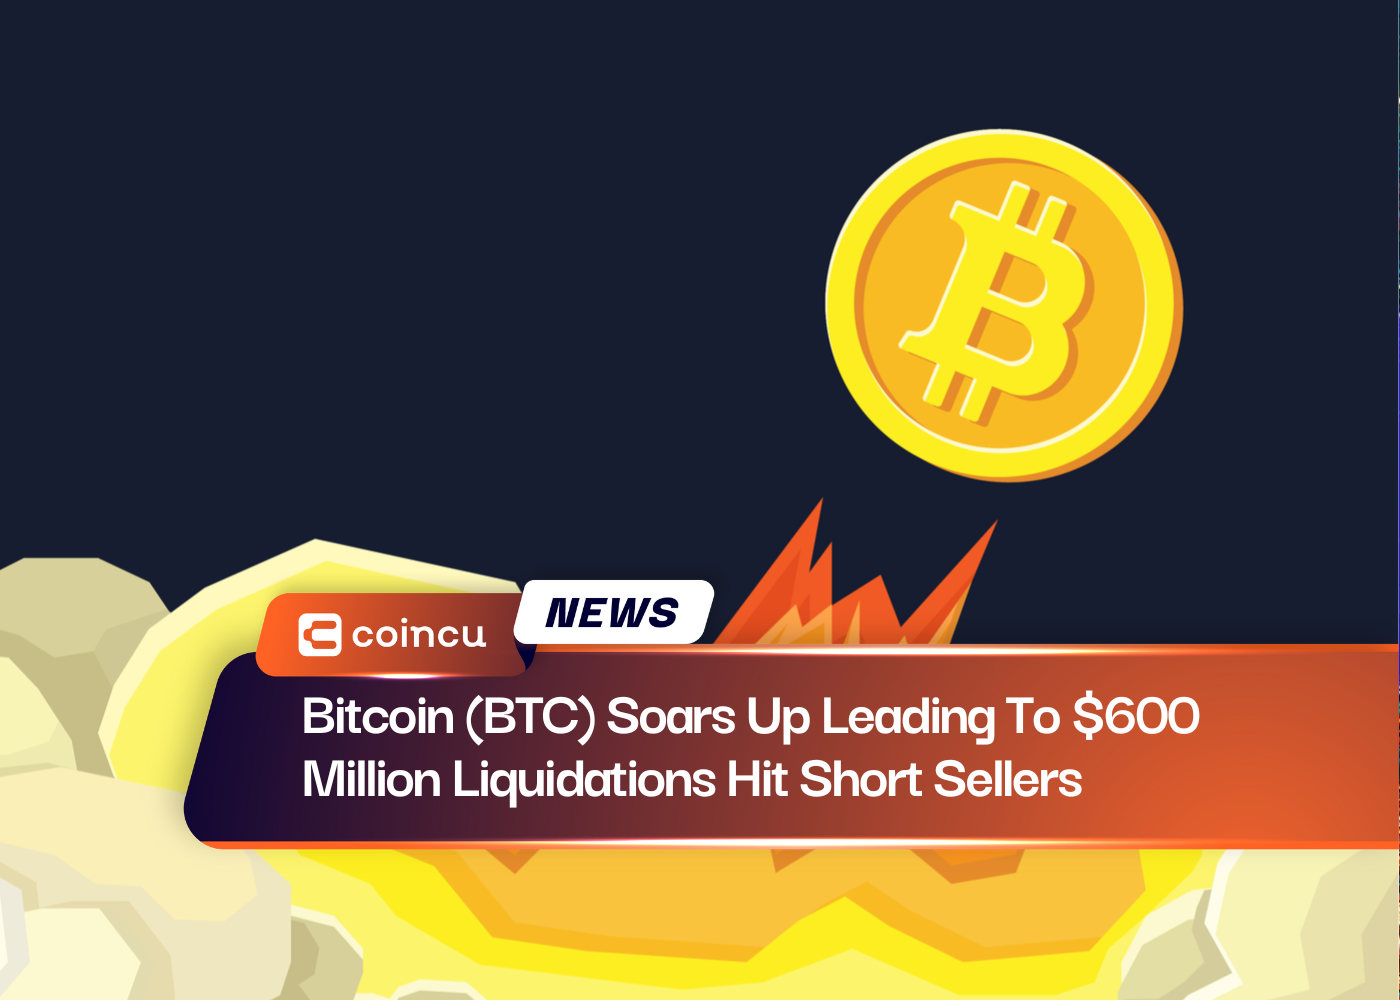 Bitcoin (BTC) Soars Up Leading To $600 Million Liquidations Hit Short Sellers